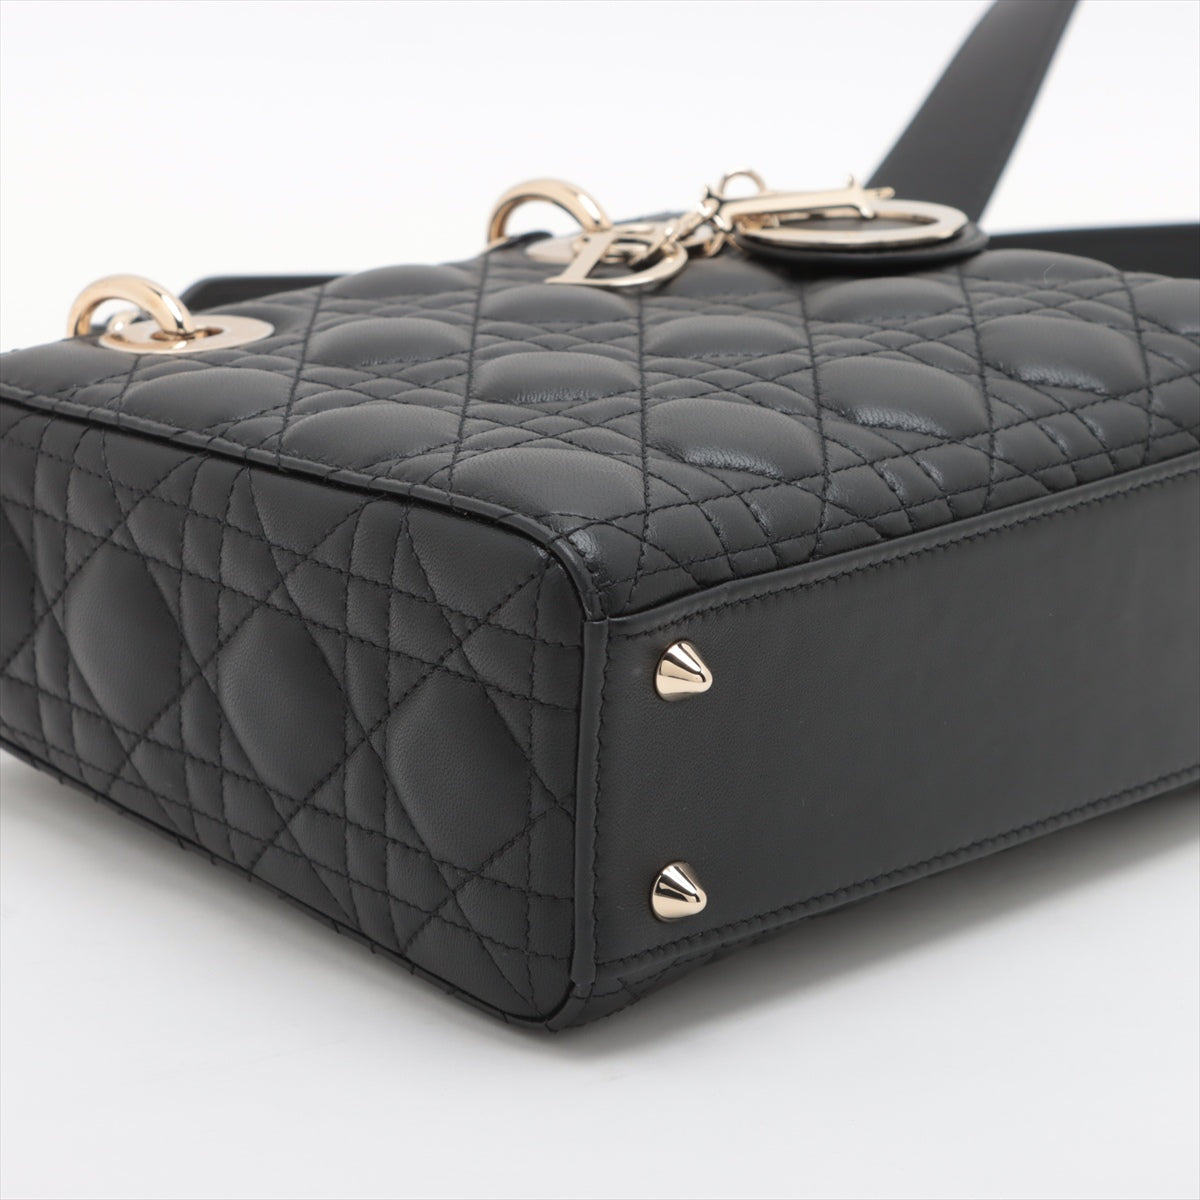 Christian Dior My Lady Dior Cannage Leather 2 Way Handbag Black With charms